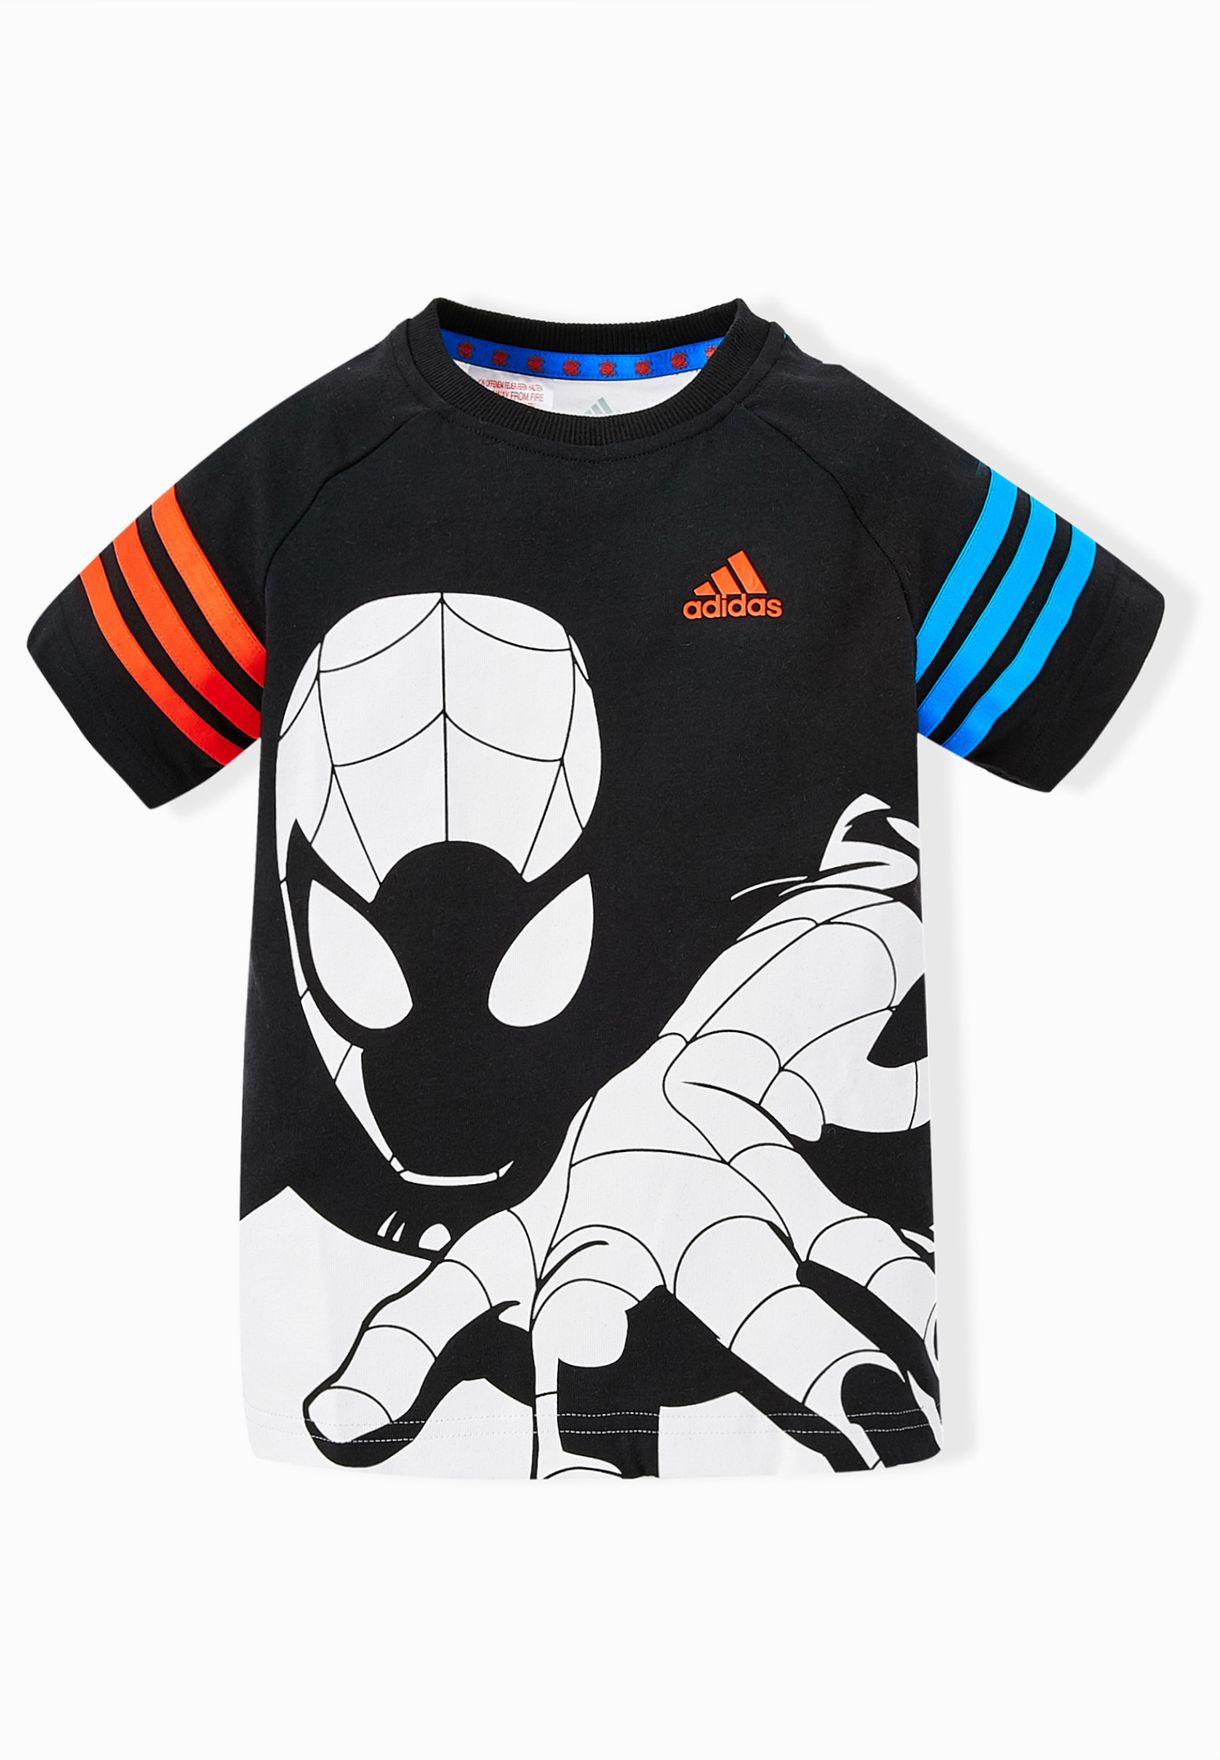 adidas spiderman t shirt